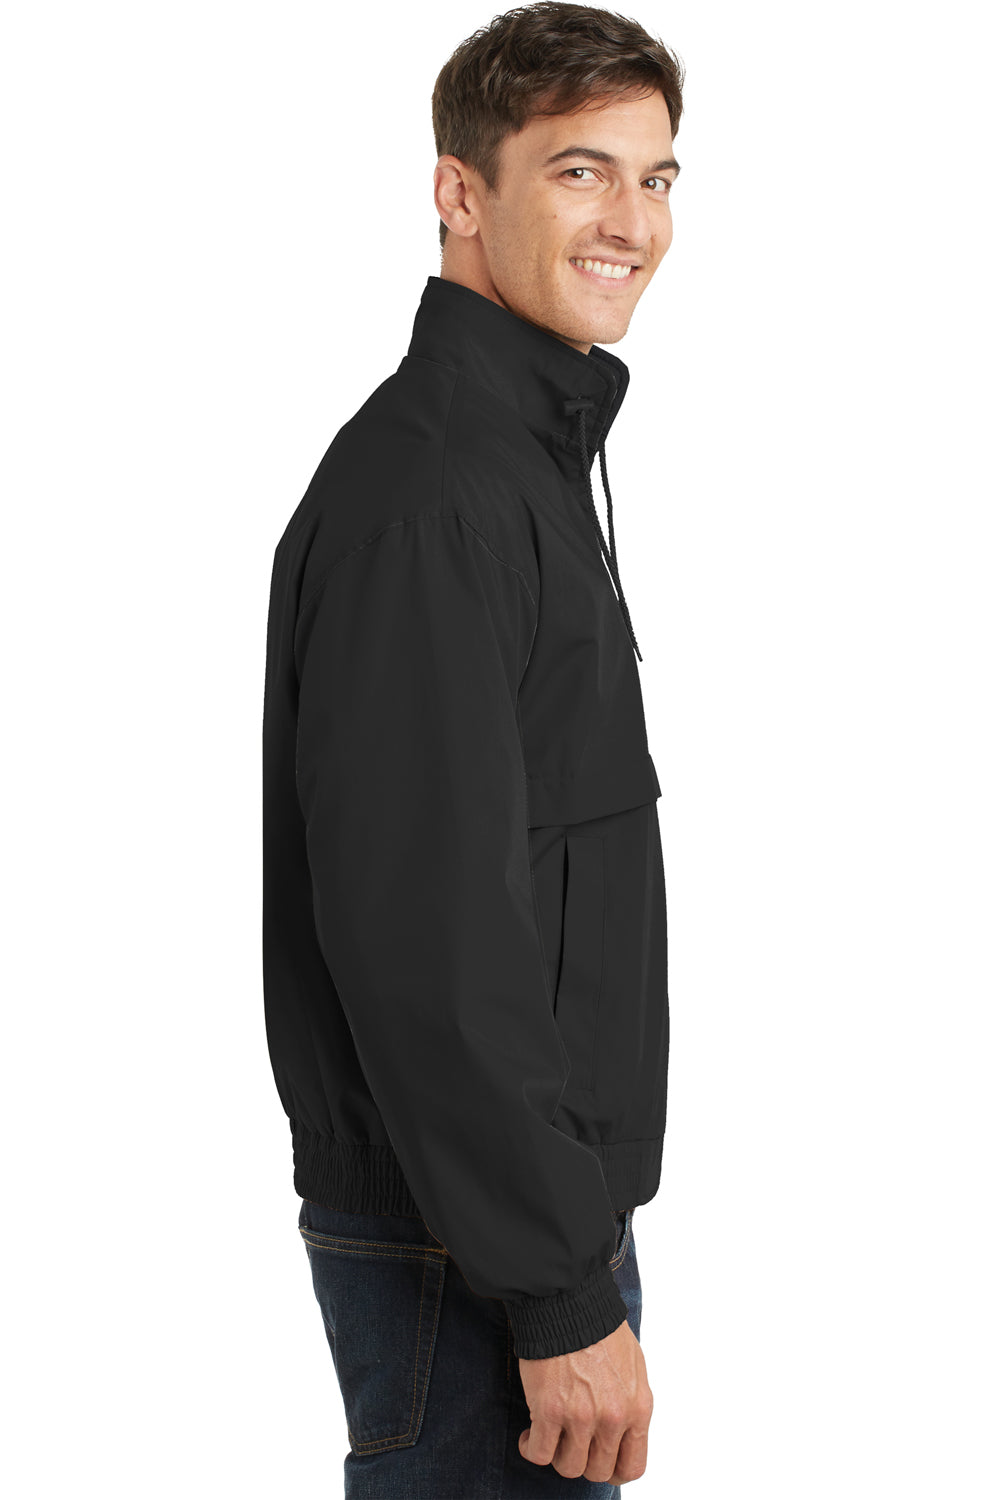 Port Authority J753 Mens Classic Poplin Wind & Water Resistant Full Zip Jacket Black Side